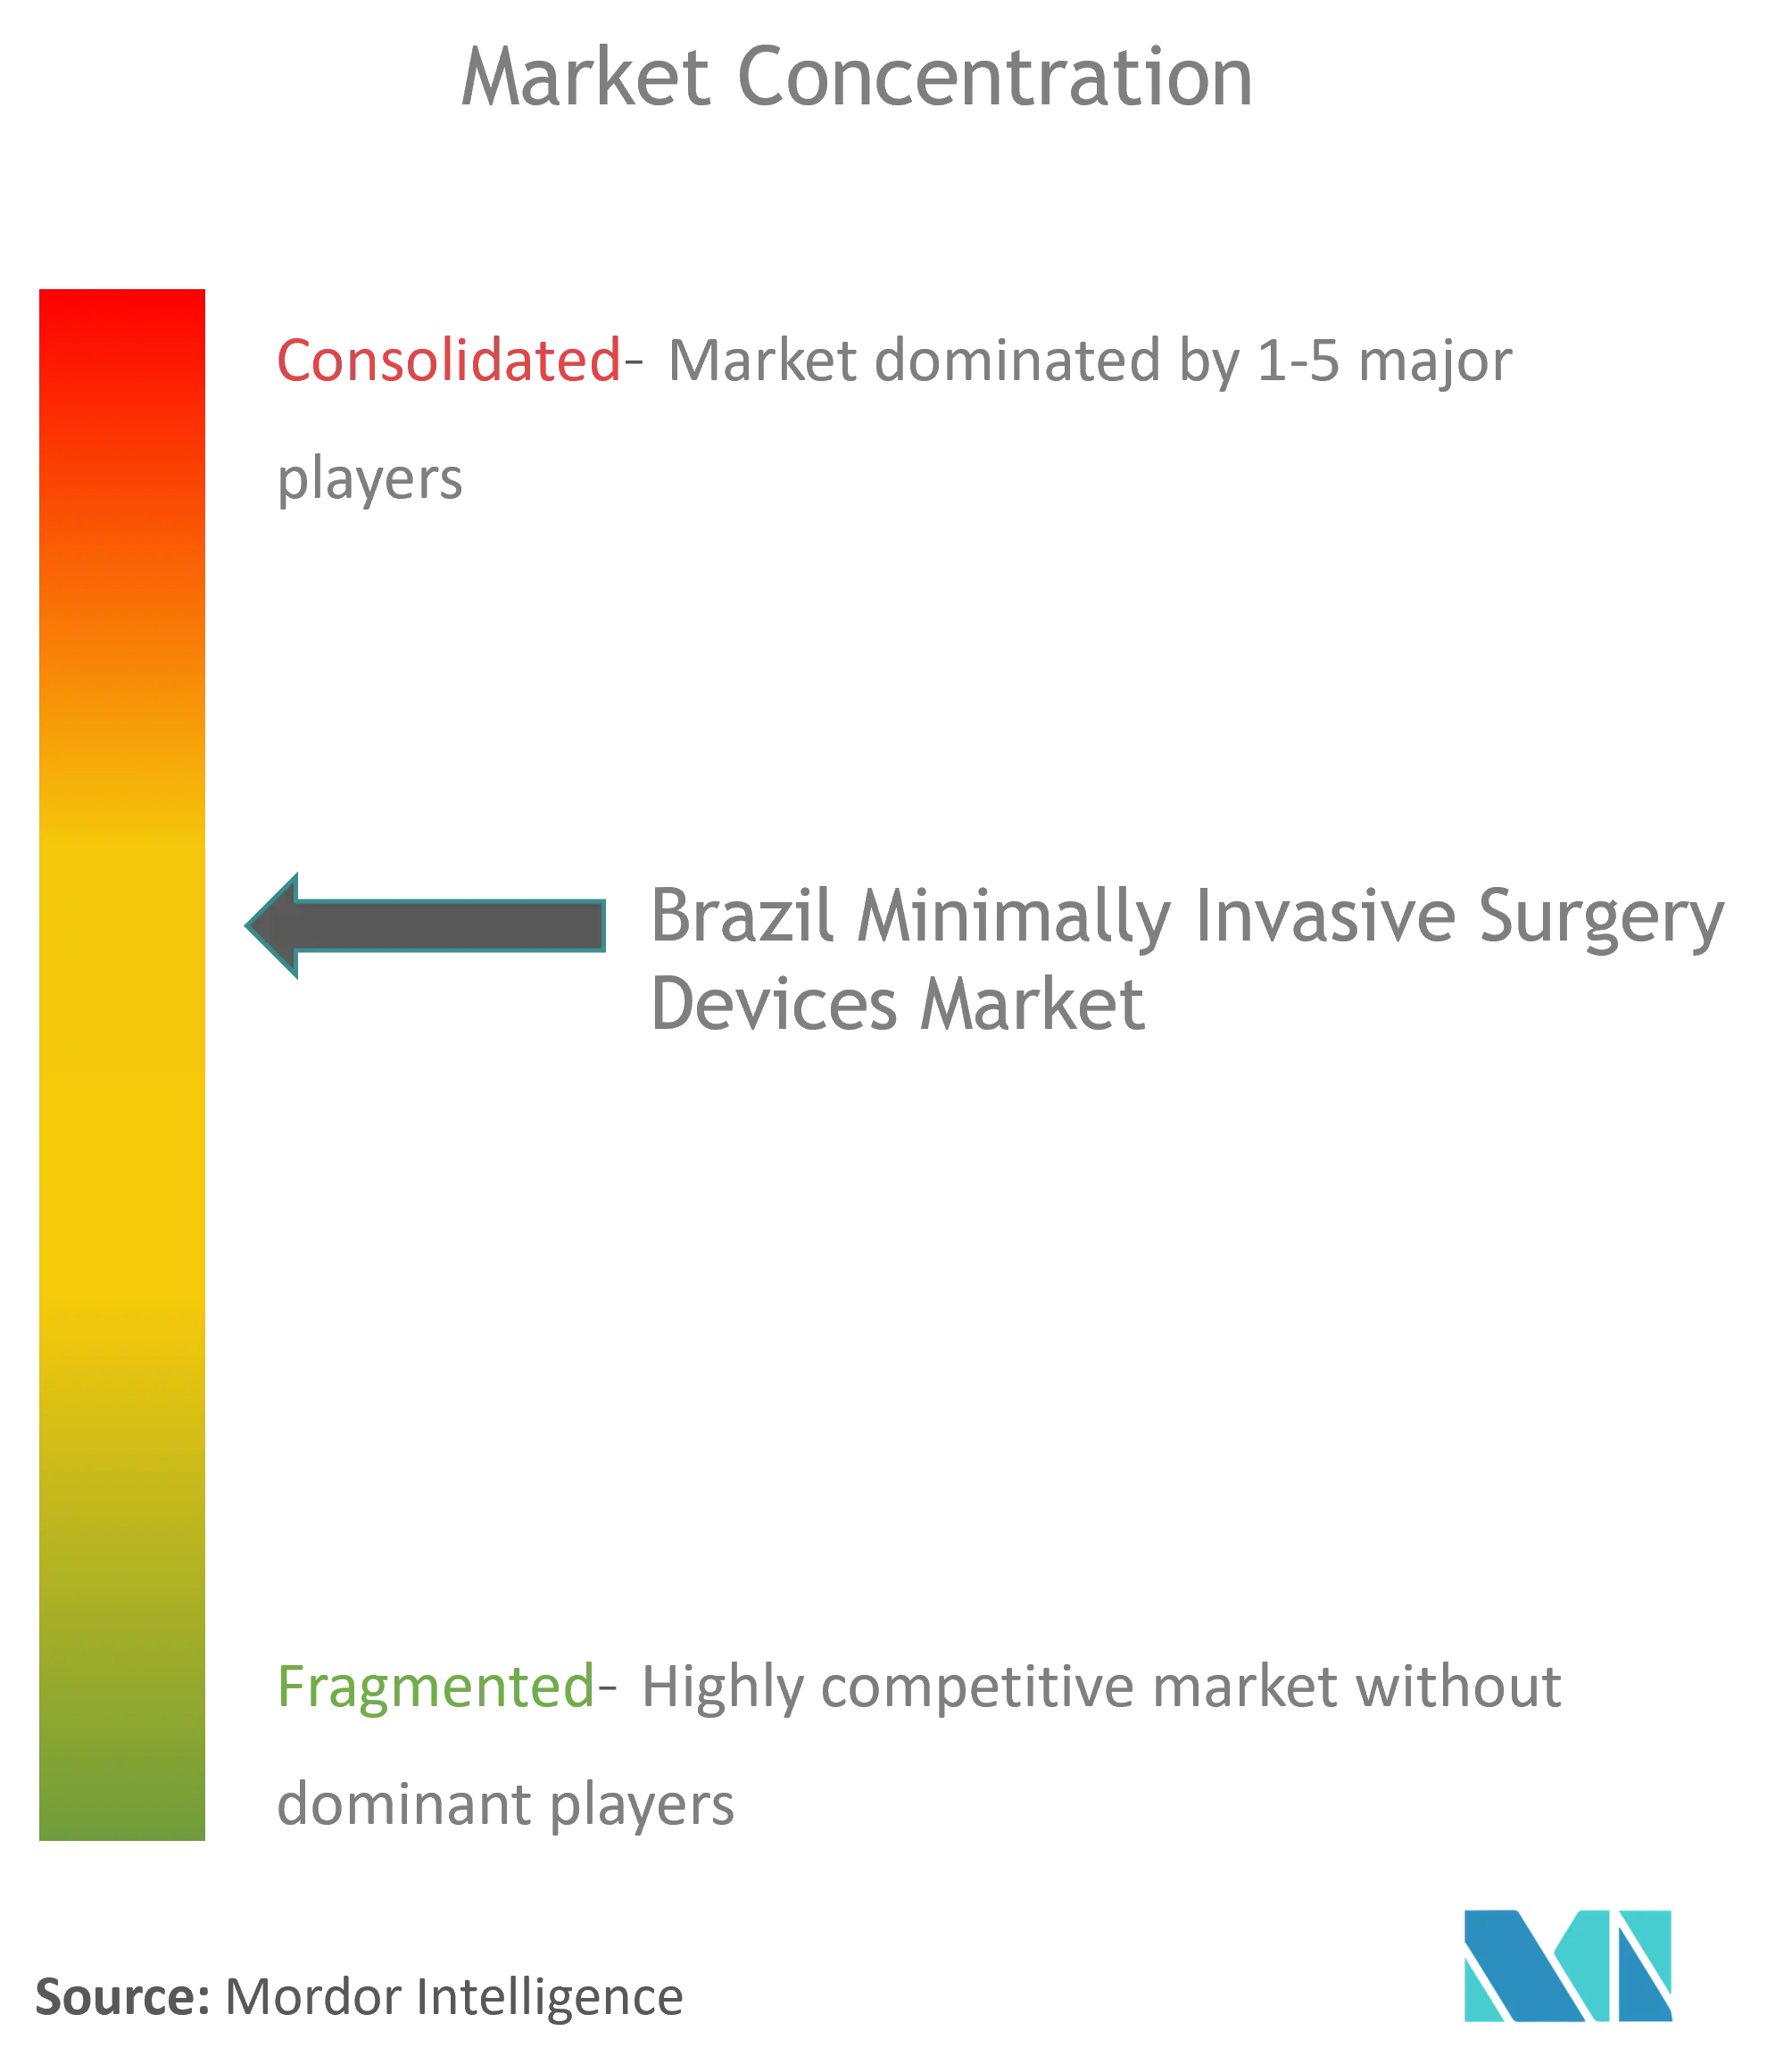 Brazil Minimally Invasive Surgery Devices Market Concentration